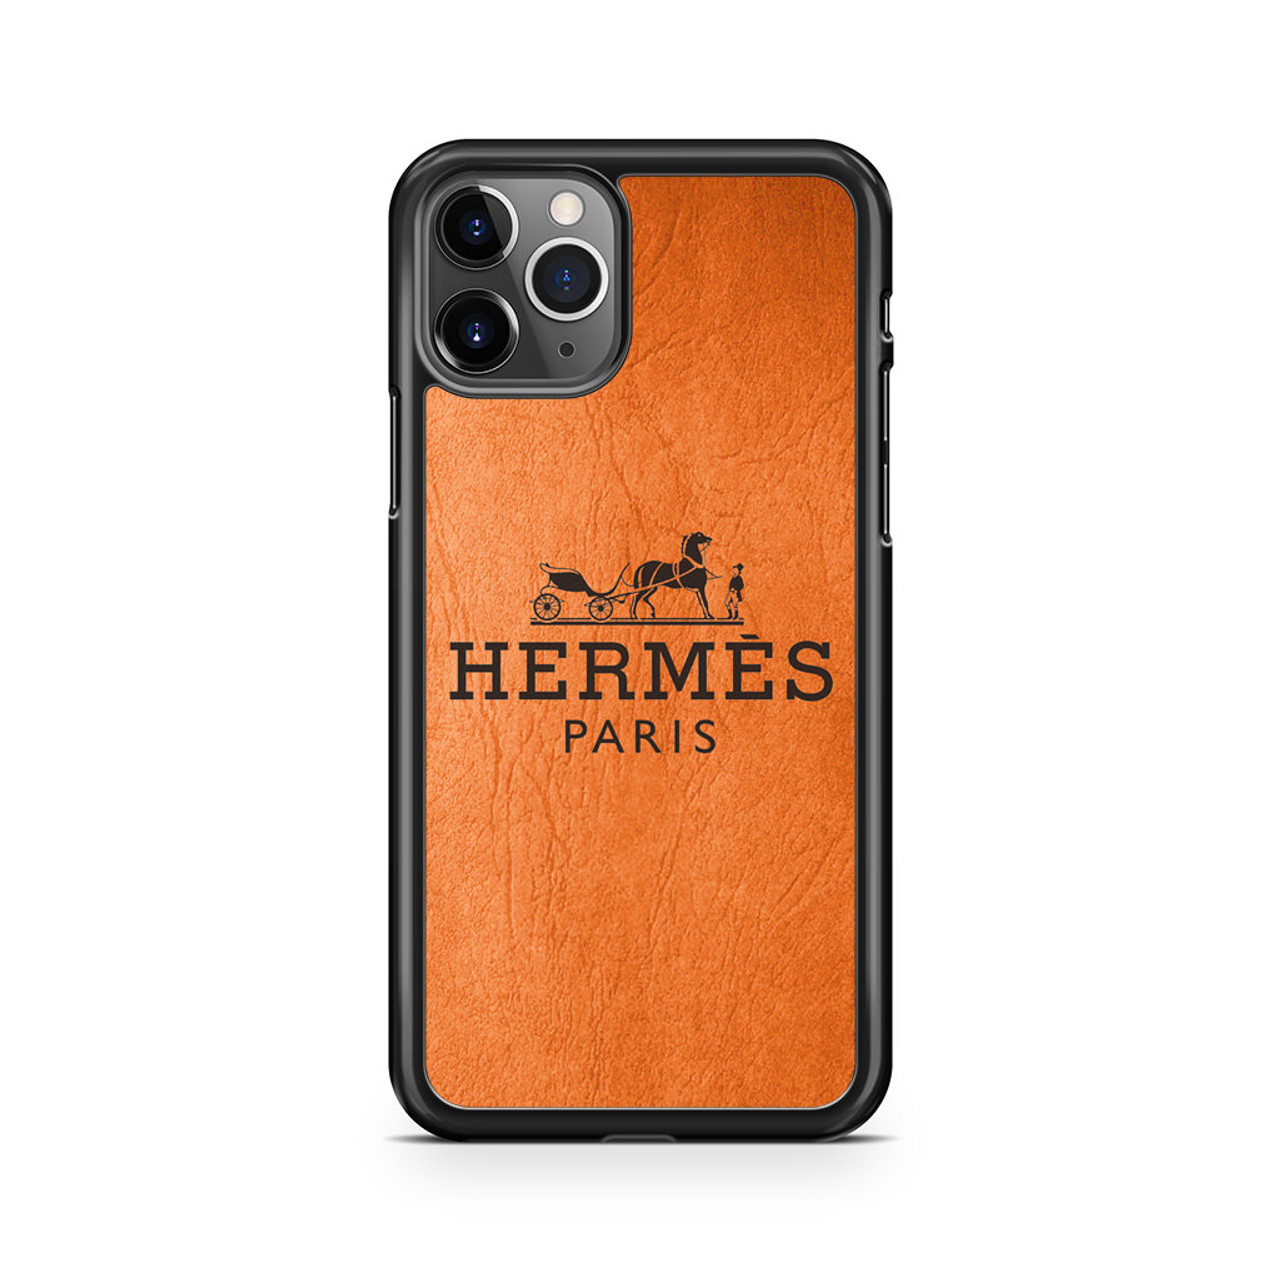 Hermes Paris iPhone 11 Pro Max Case 